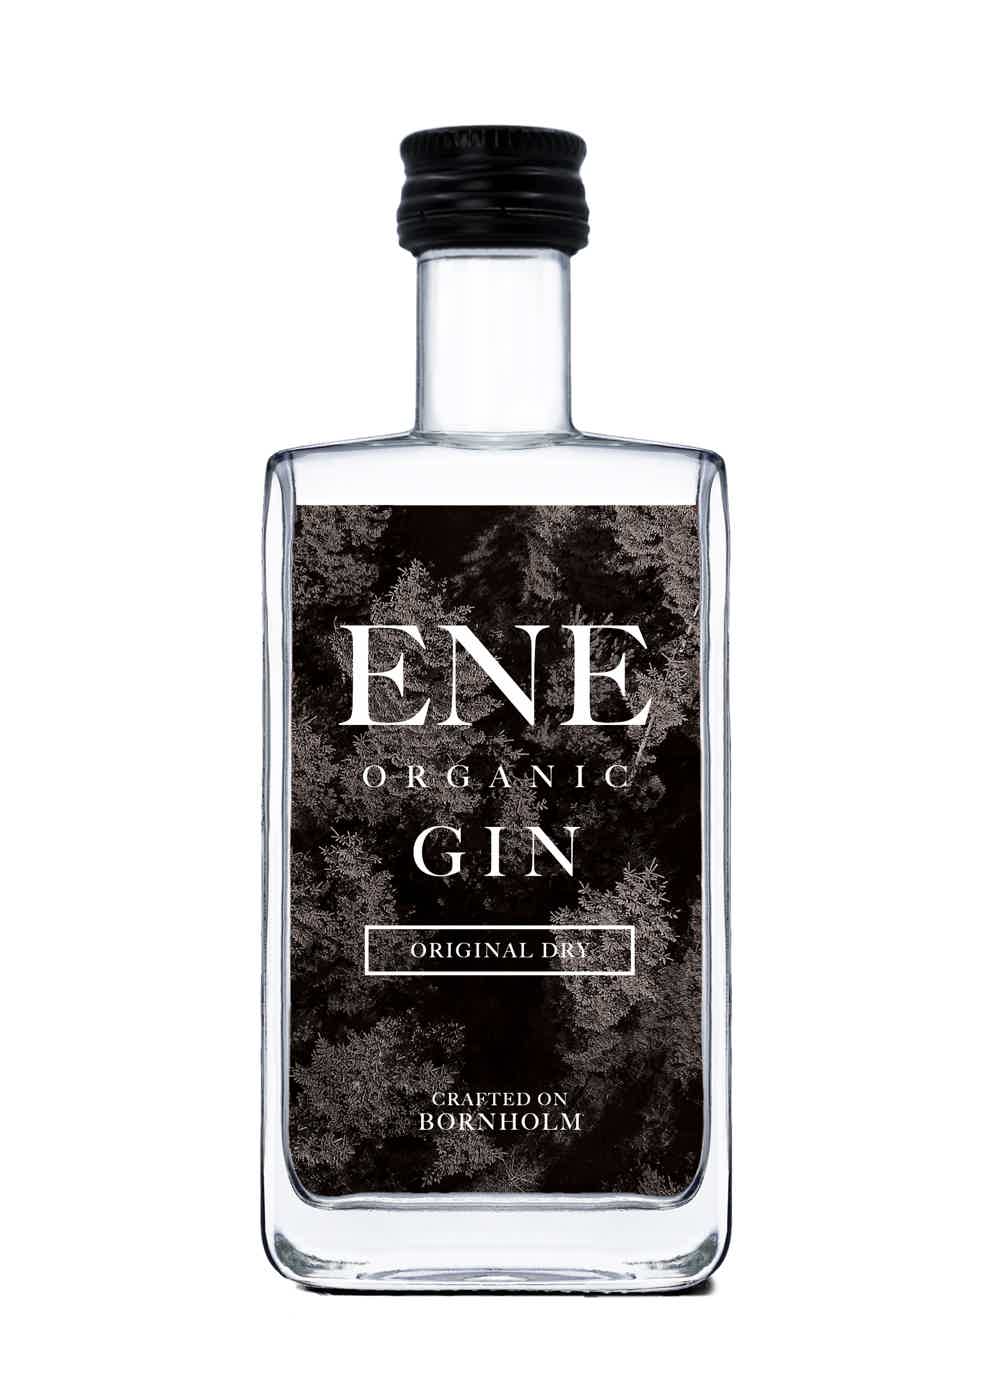  ENE Organic Gin - Original Dry 40%